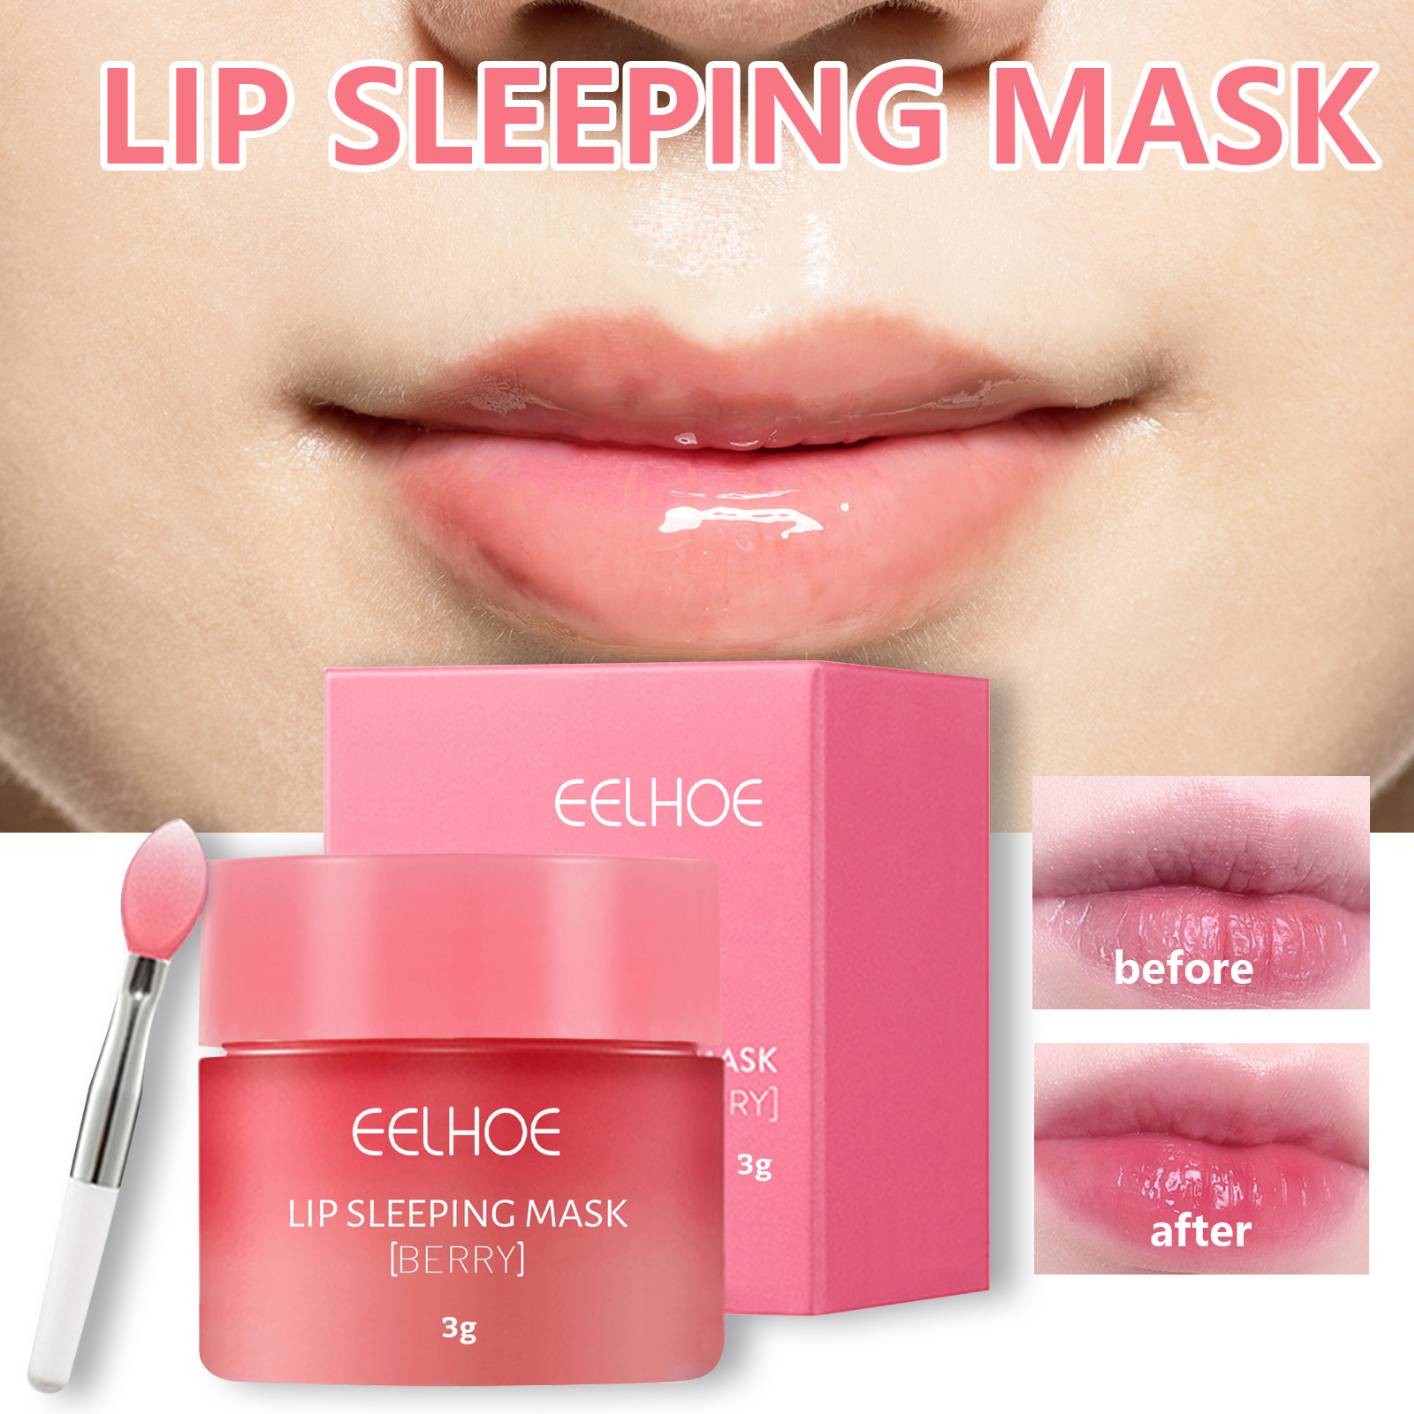 20g Lip Sleeping Mask with Lip Brush, Overnight Intensive Lip Treatment, Moisturizing Lip Care, Camellia Seed Oil, Olive Oil, Berries, Vitamins